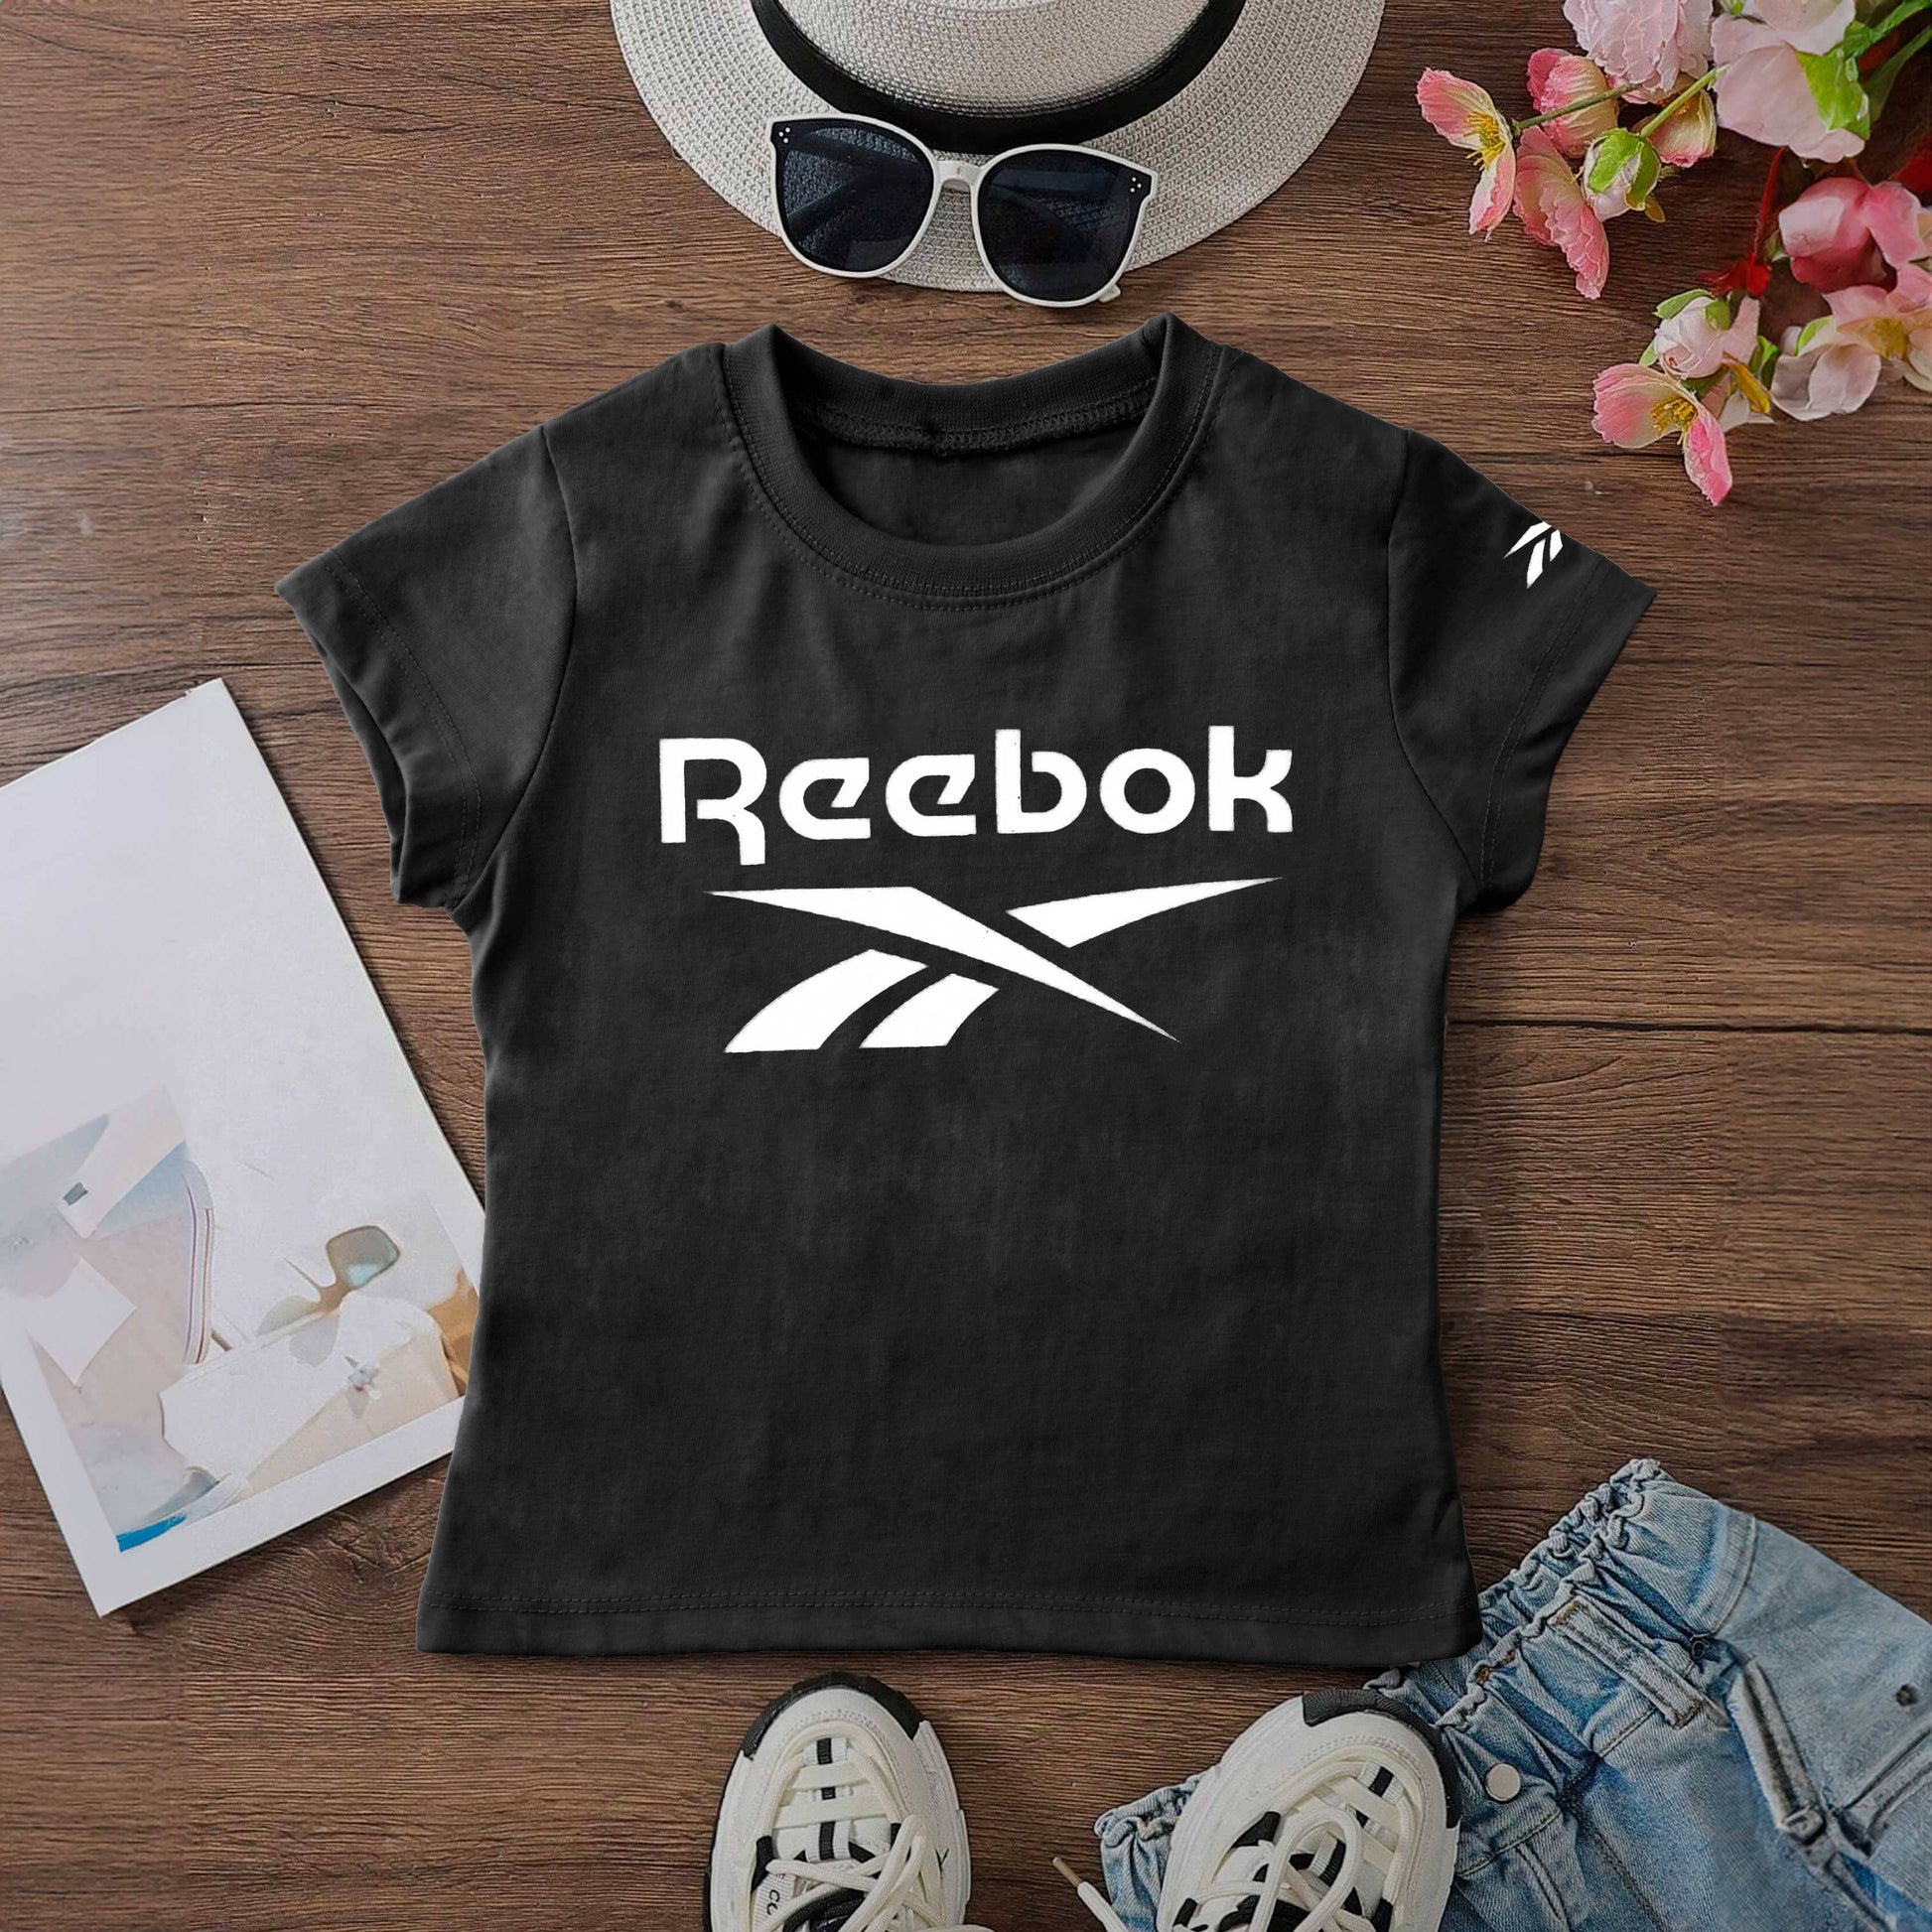 Reebok Kid's Logo Printed Minor Fault Short Sleeve Tee Shirt Kid's Tee Shirt HAS Apparel Black 2 Years 